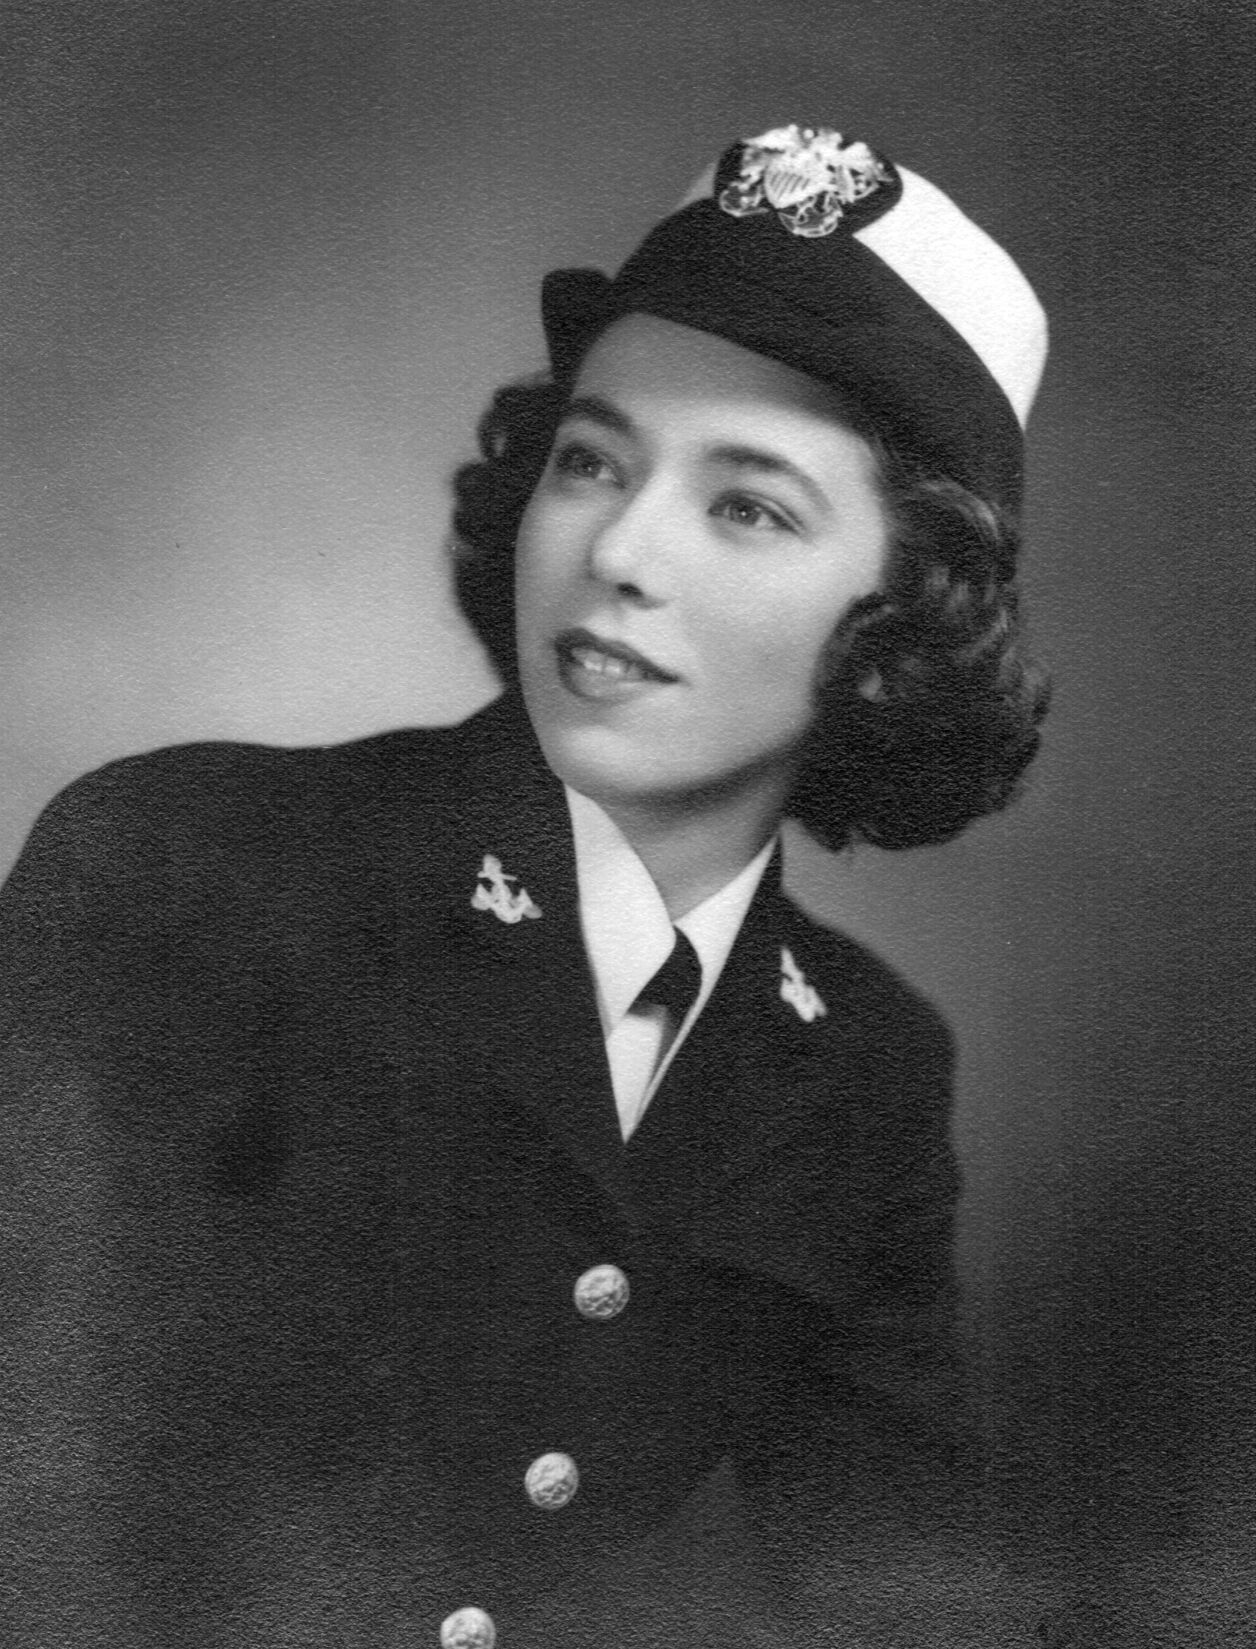 Isla Frederick in the Navy